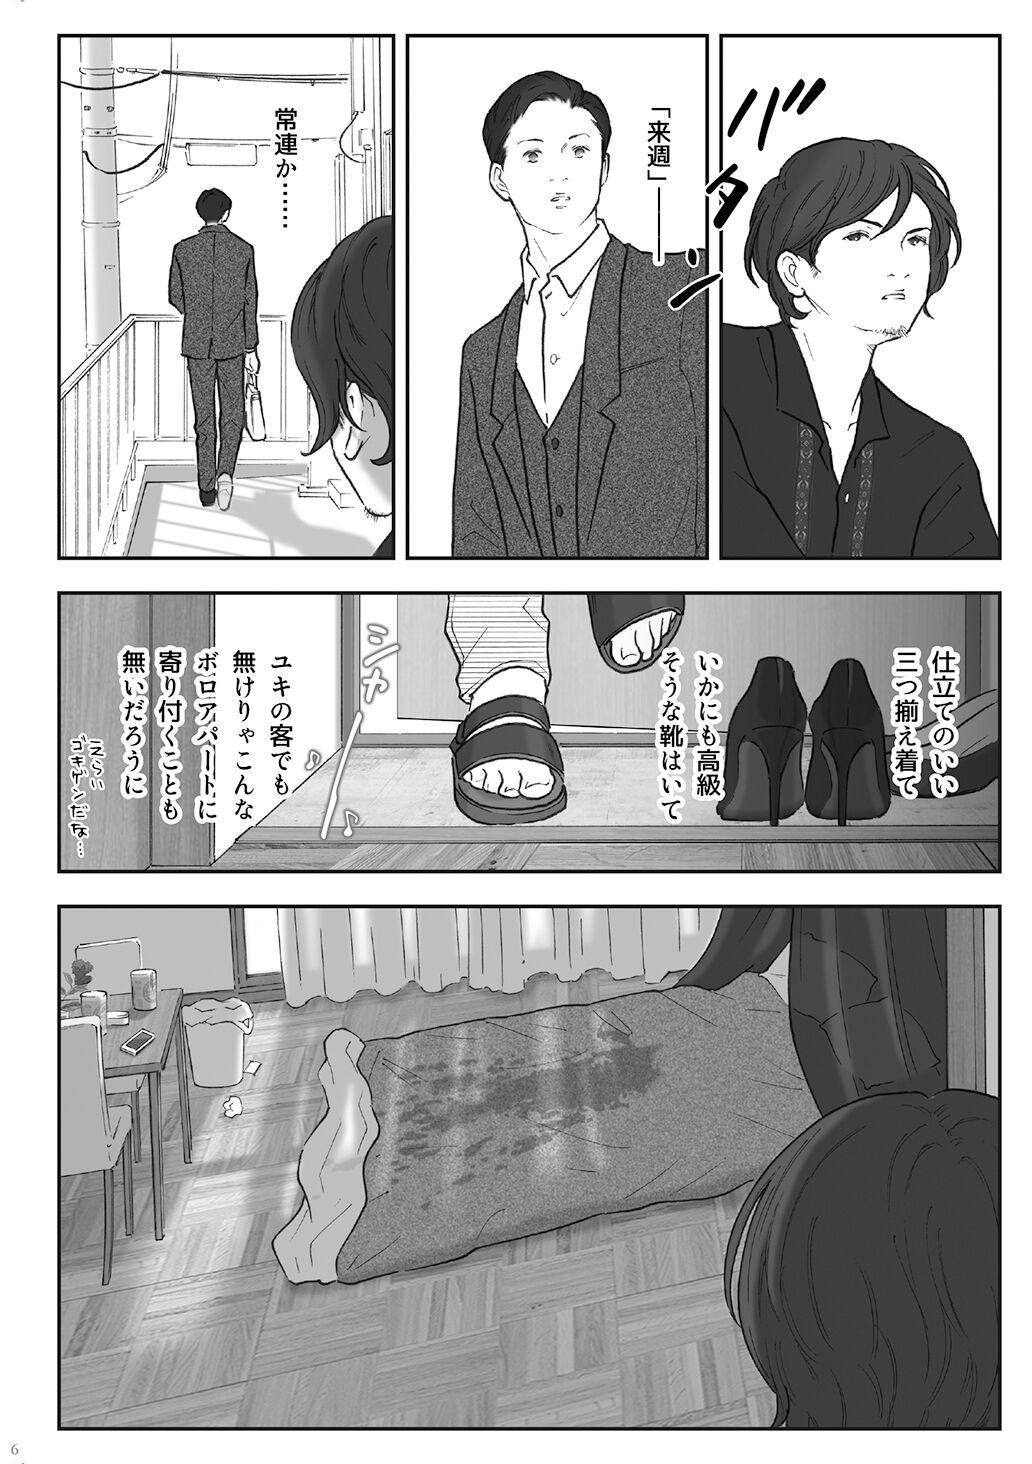 Buceta 柘榴 - Original Spycam - Page 6